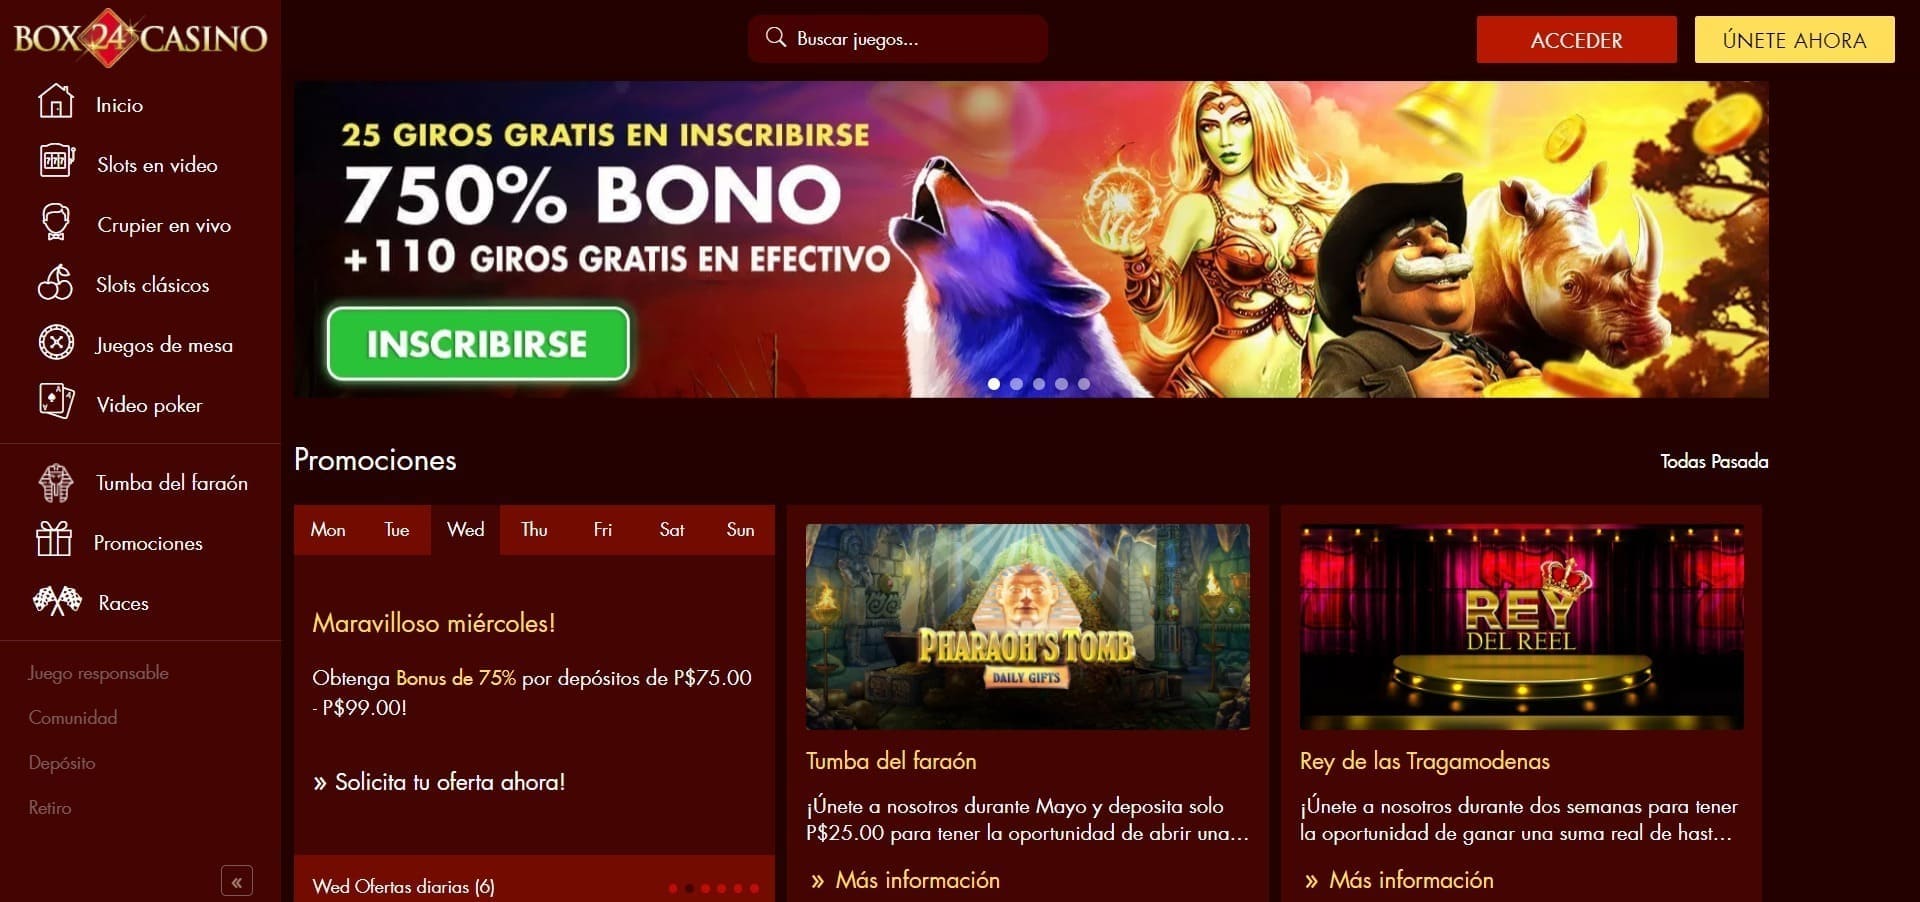 Bonos Box24 Casino